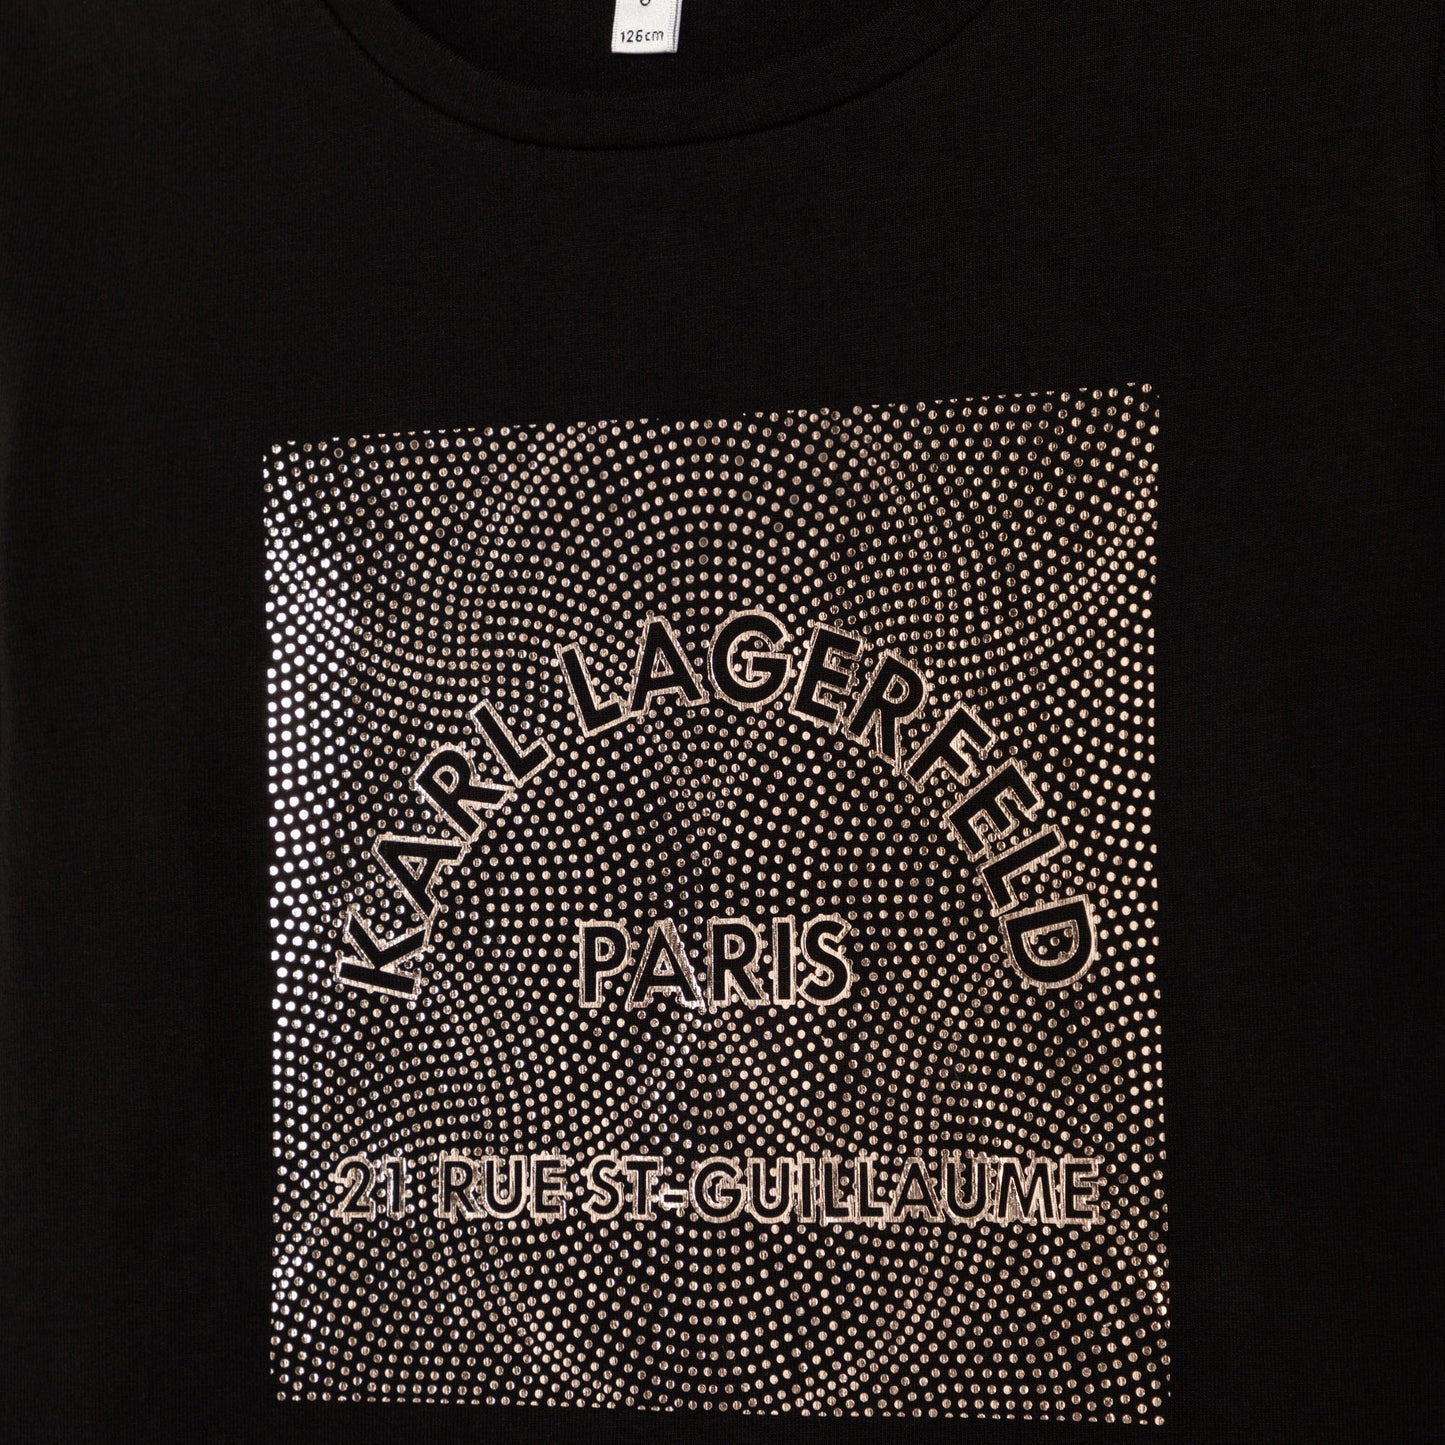 Karl Lagerfeld Art Deco Logo Print T-Shirt